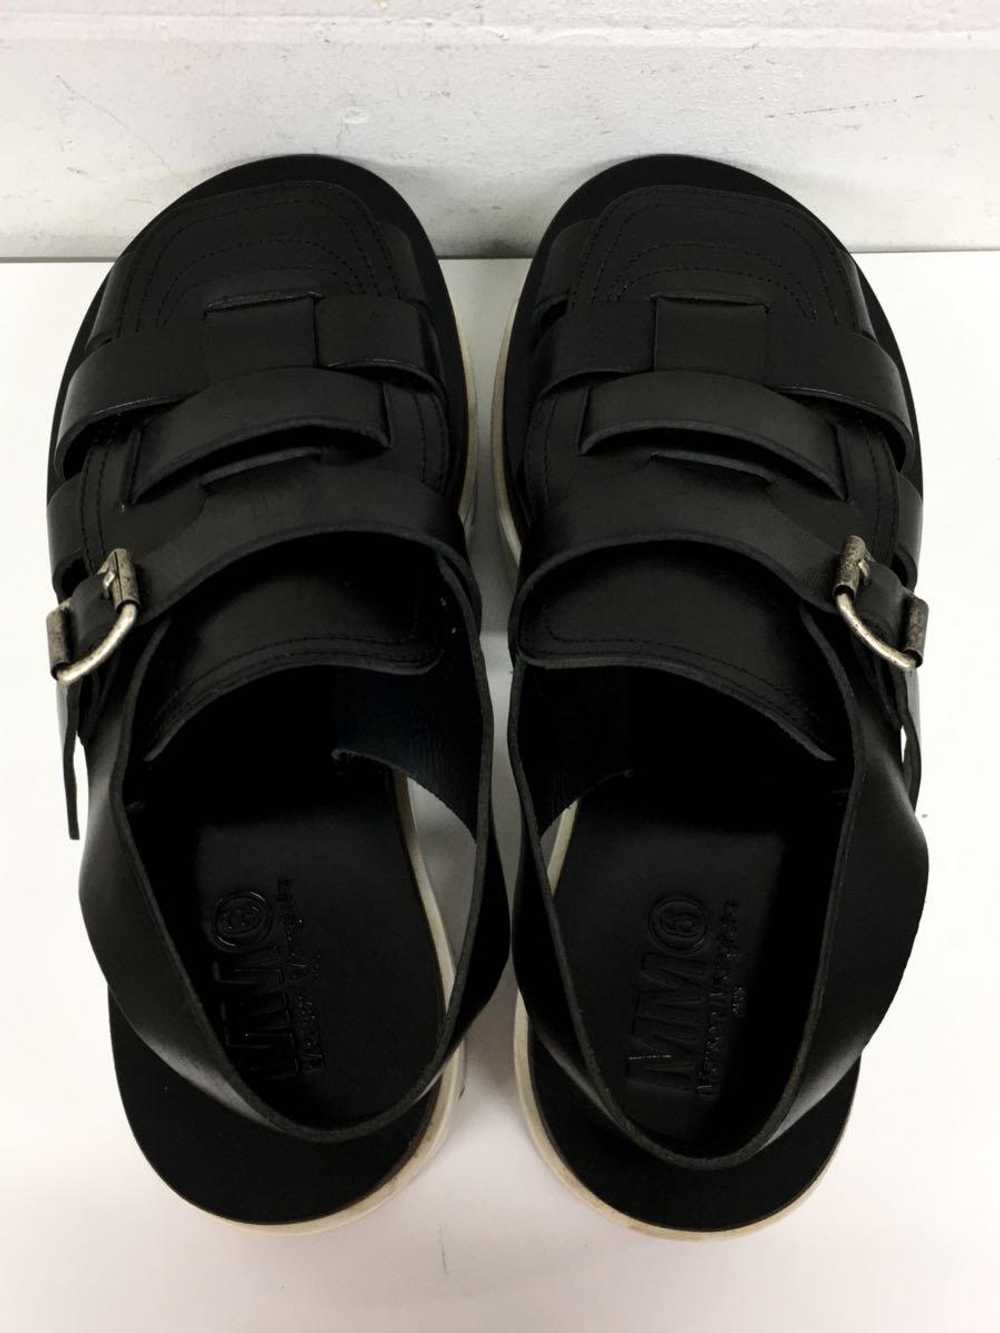 Mm6 Flat Sandals/Sandals/37/Black/Leather Shoes B… - image 4